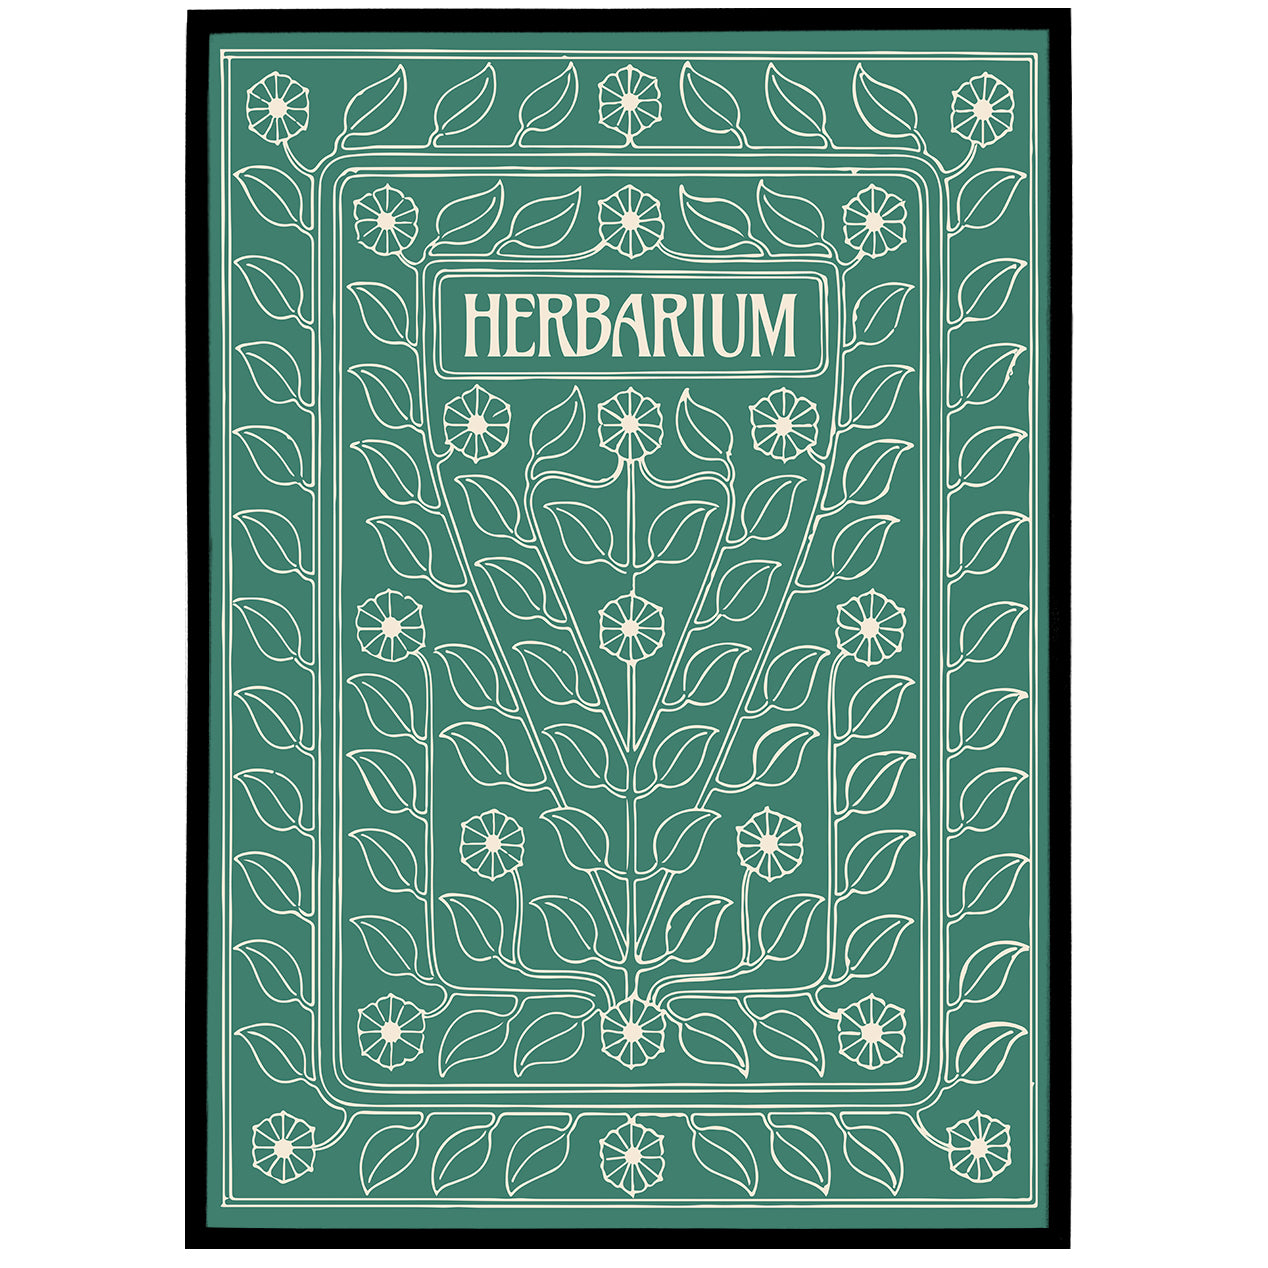 Herbarium, J. de Graag Poster